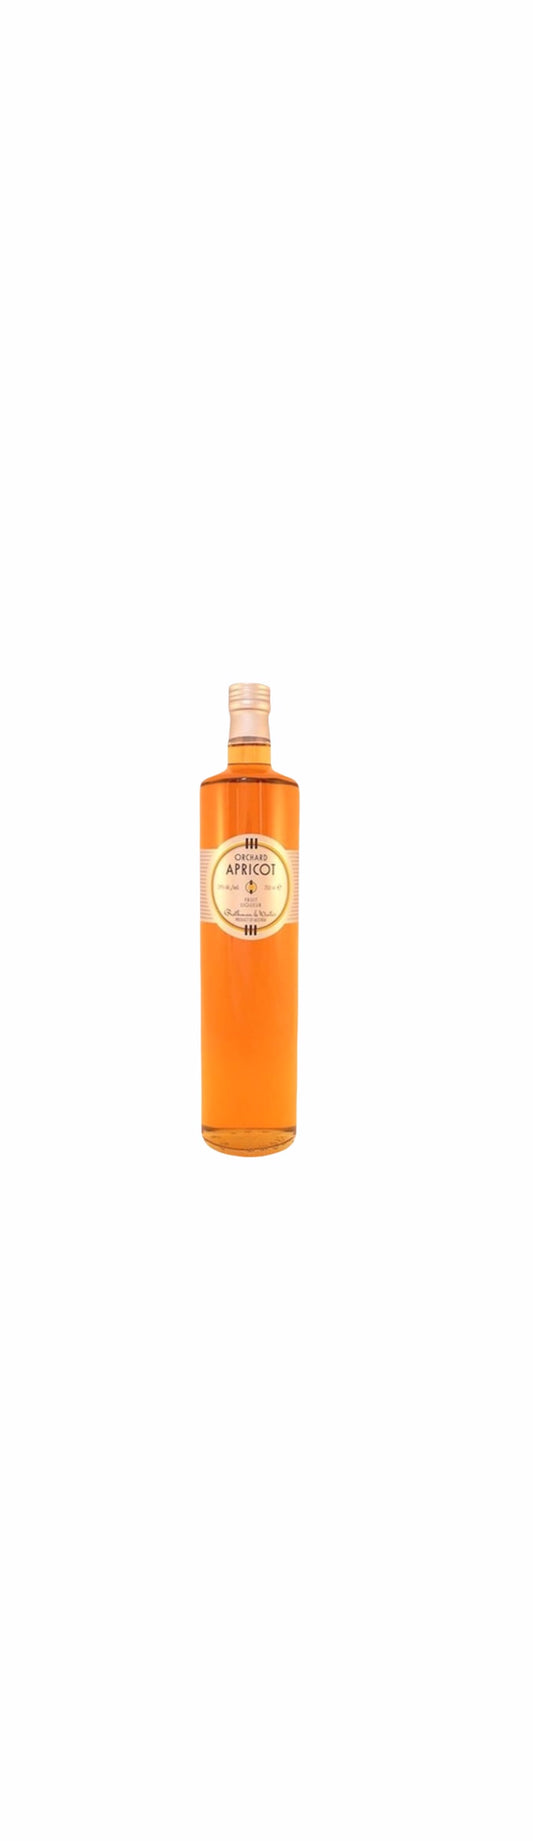 Rothman & Winter Orchard Apricot Liqueur 750ml